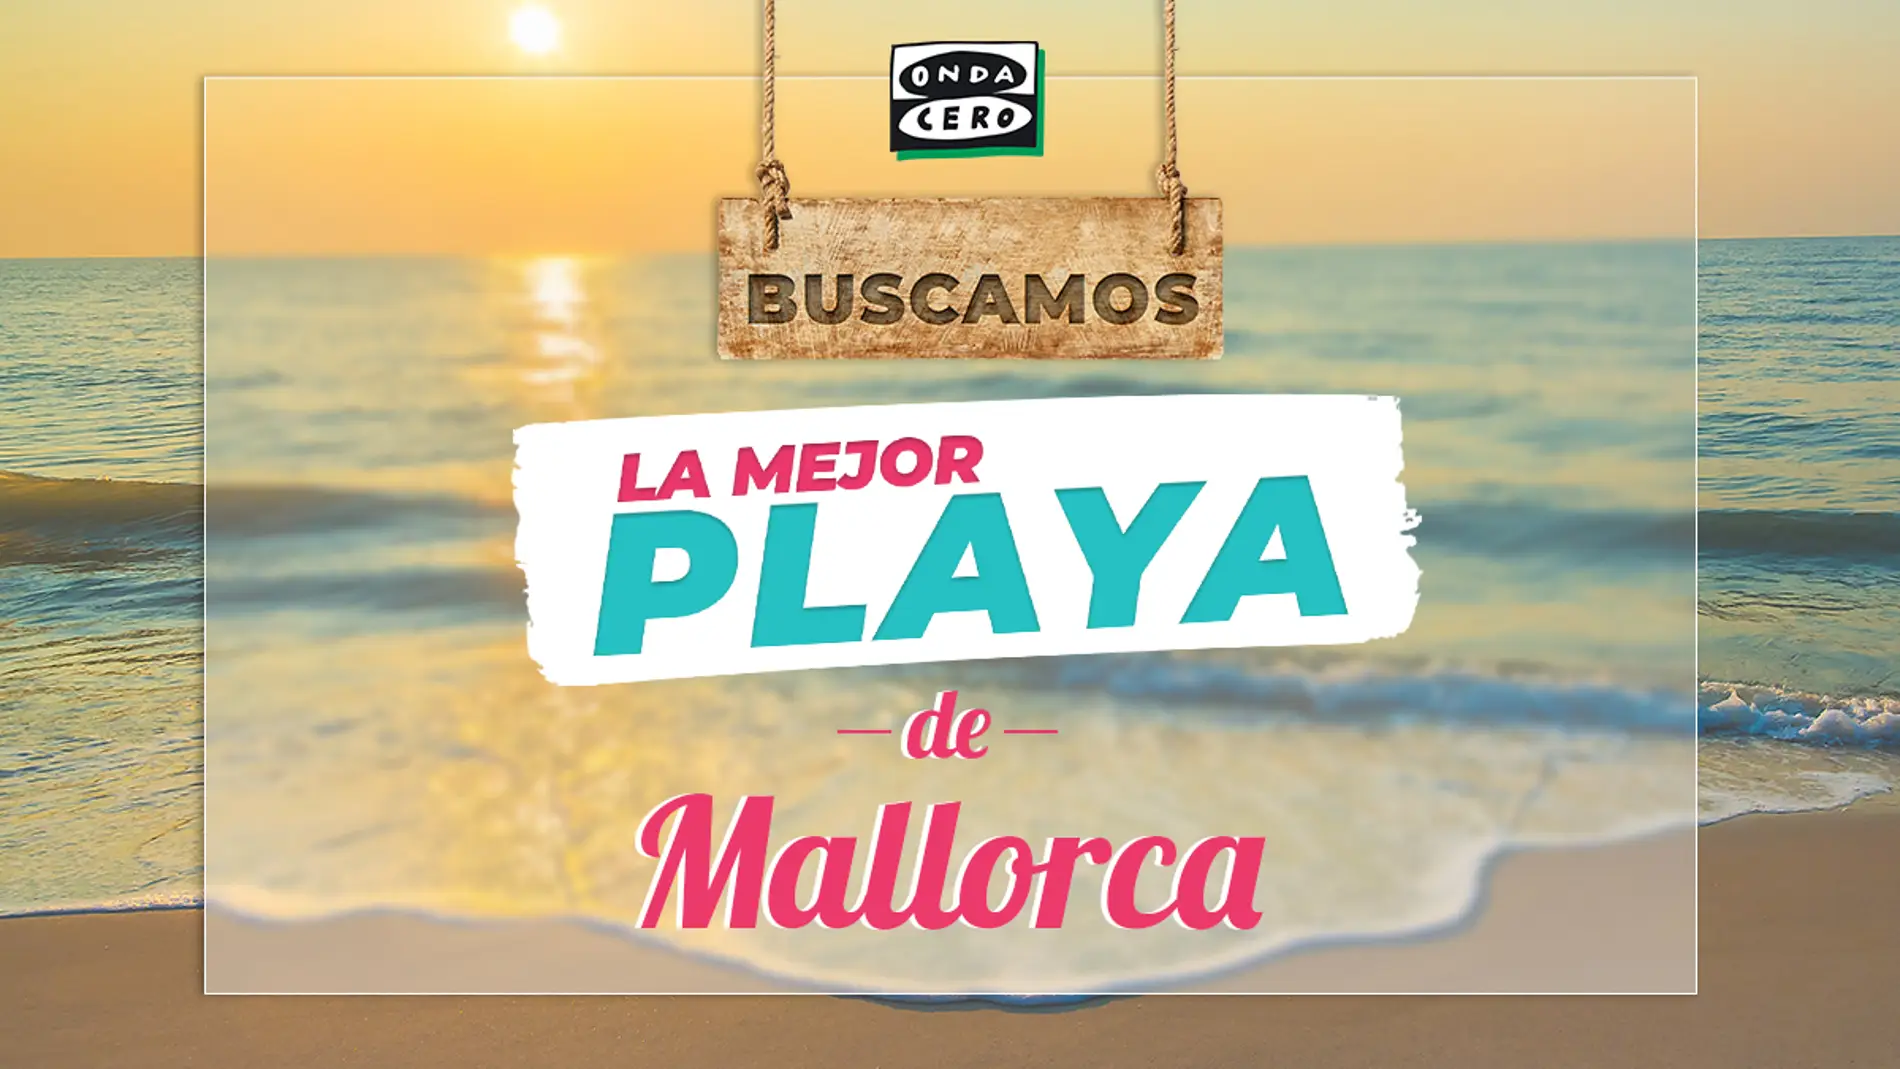 La Mejor Playa de Mallorca